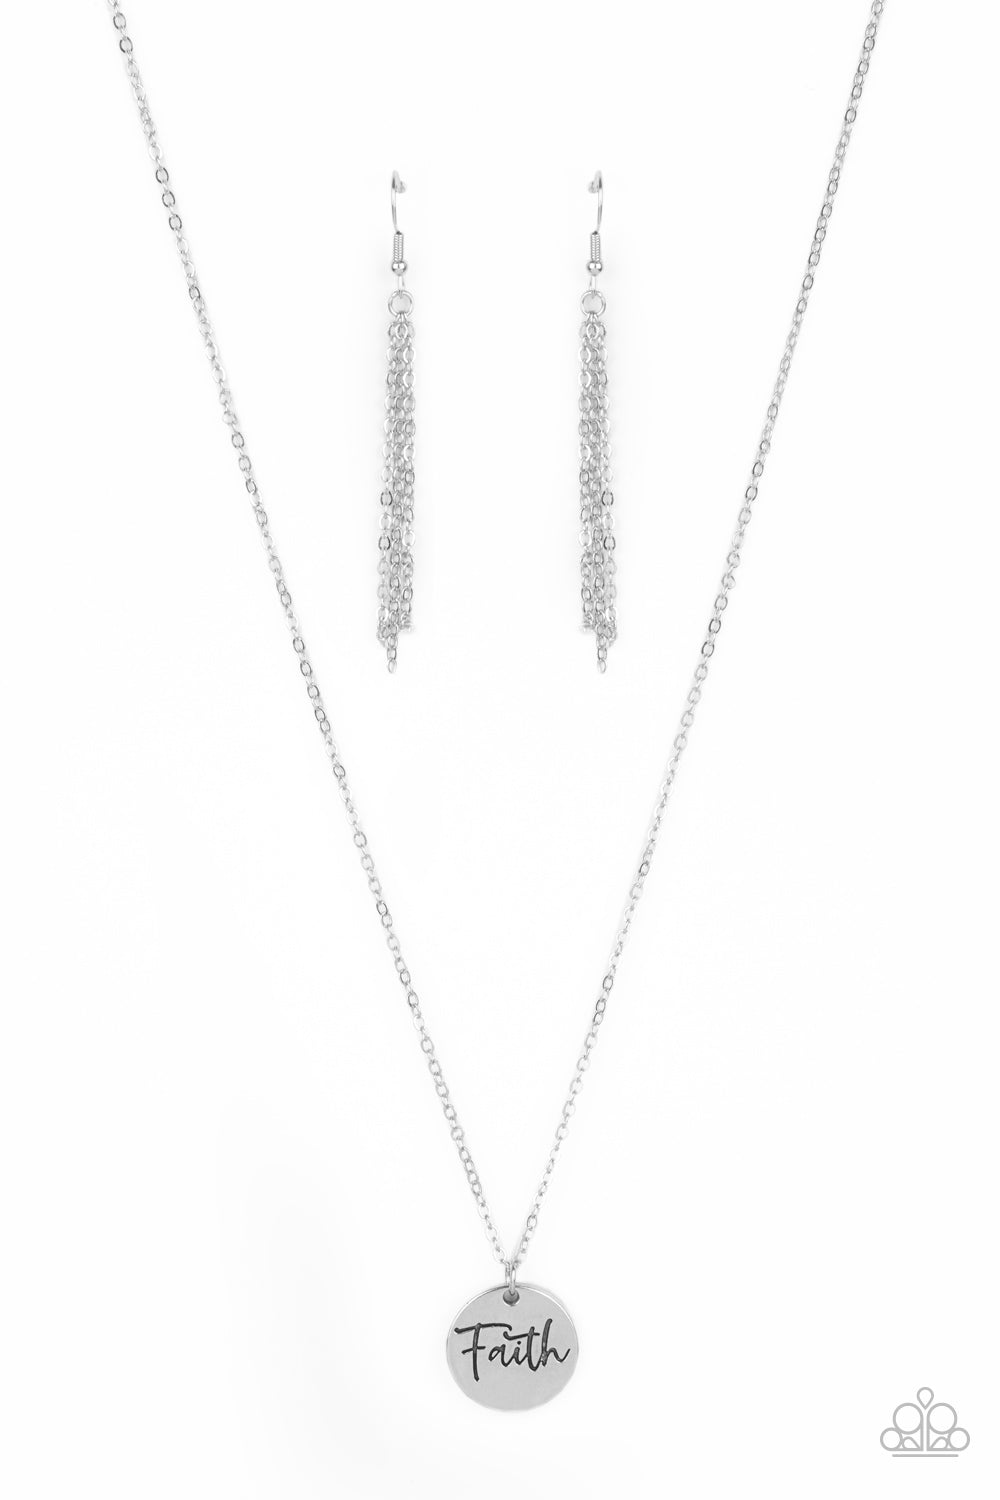 Choose Faith - Silver inspirational necklace